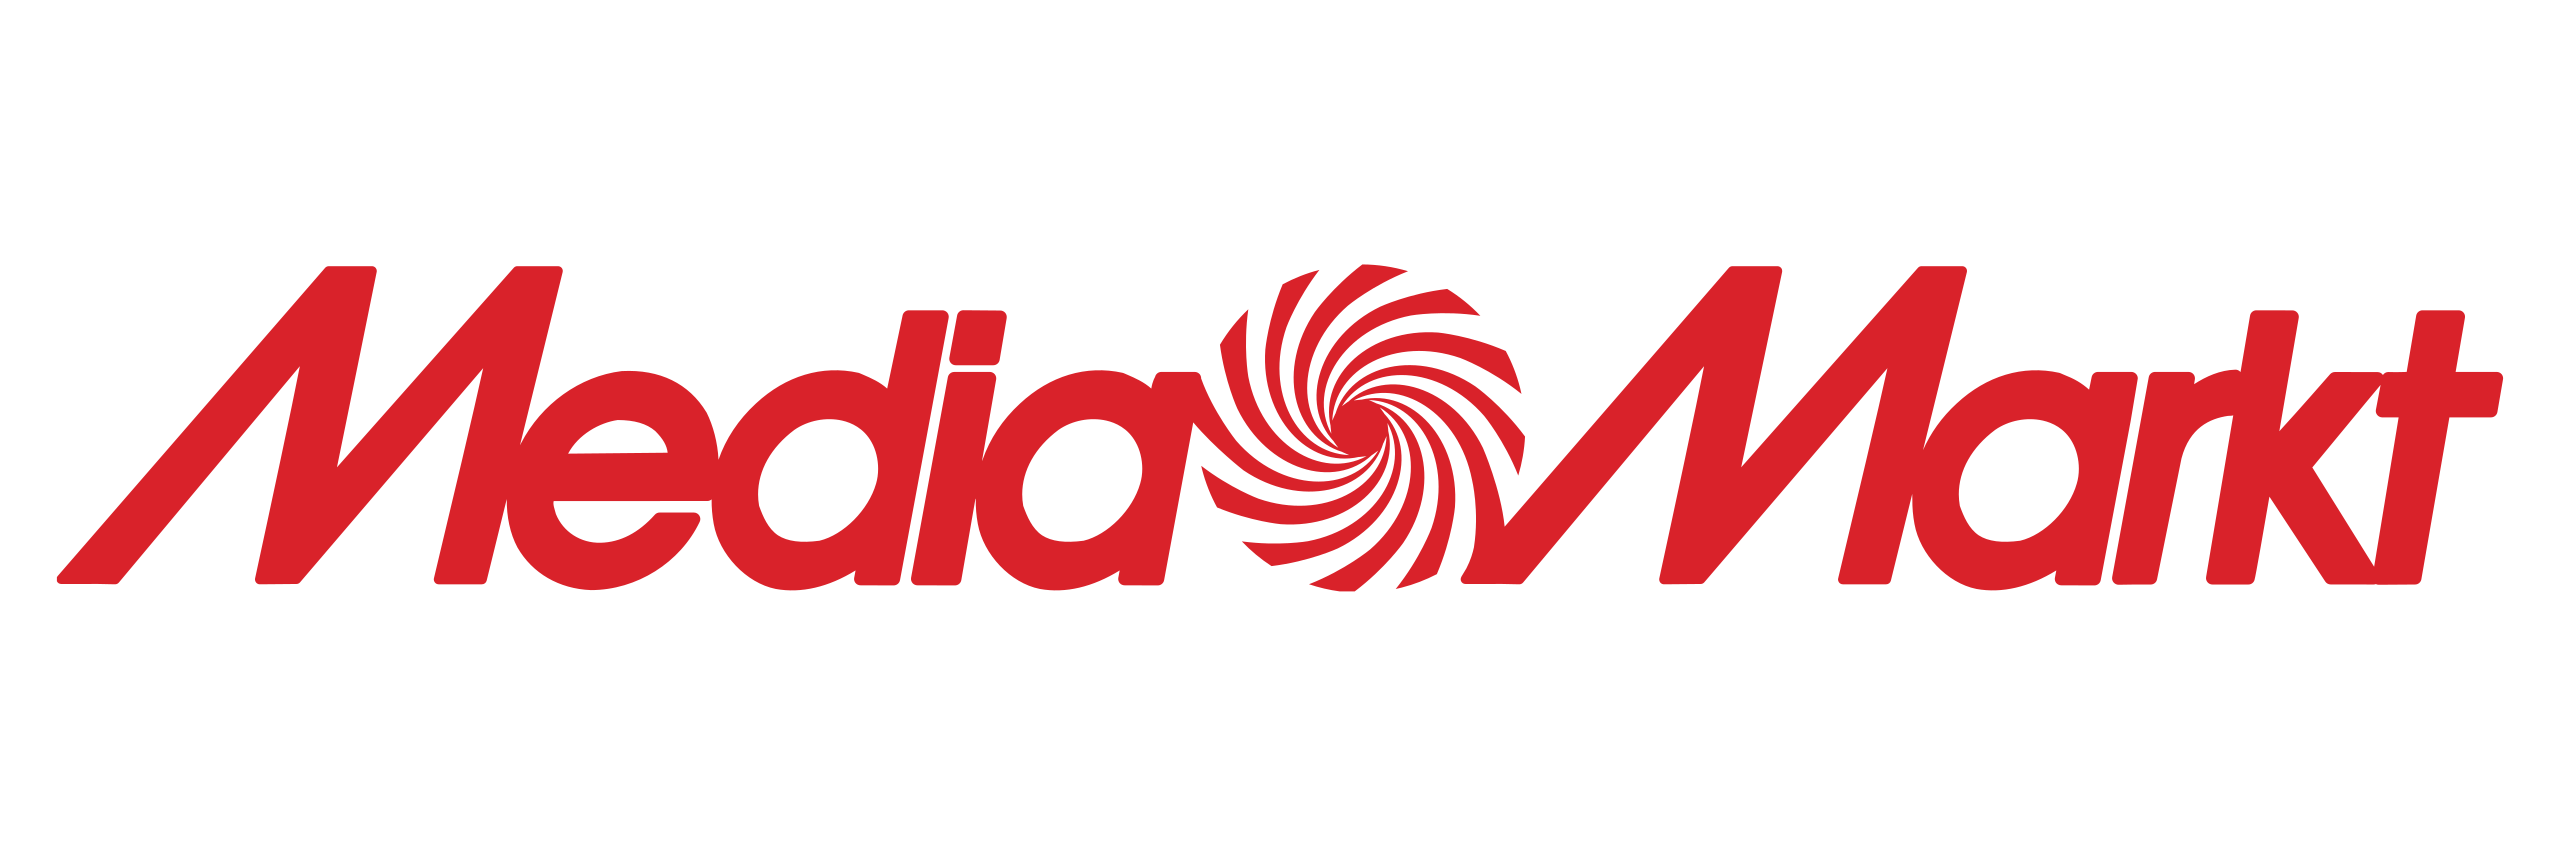 File:Media Markt logo.svg - Wikipedia